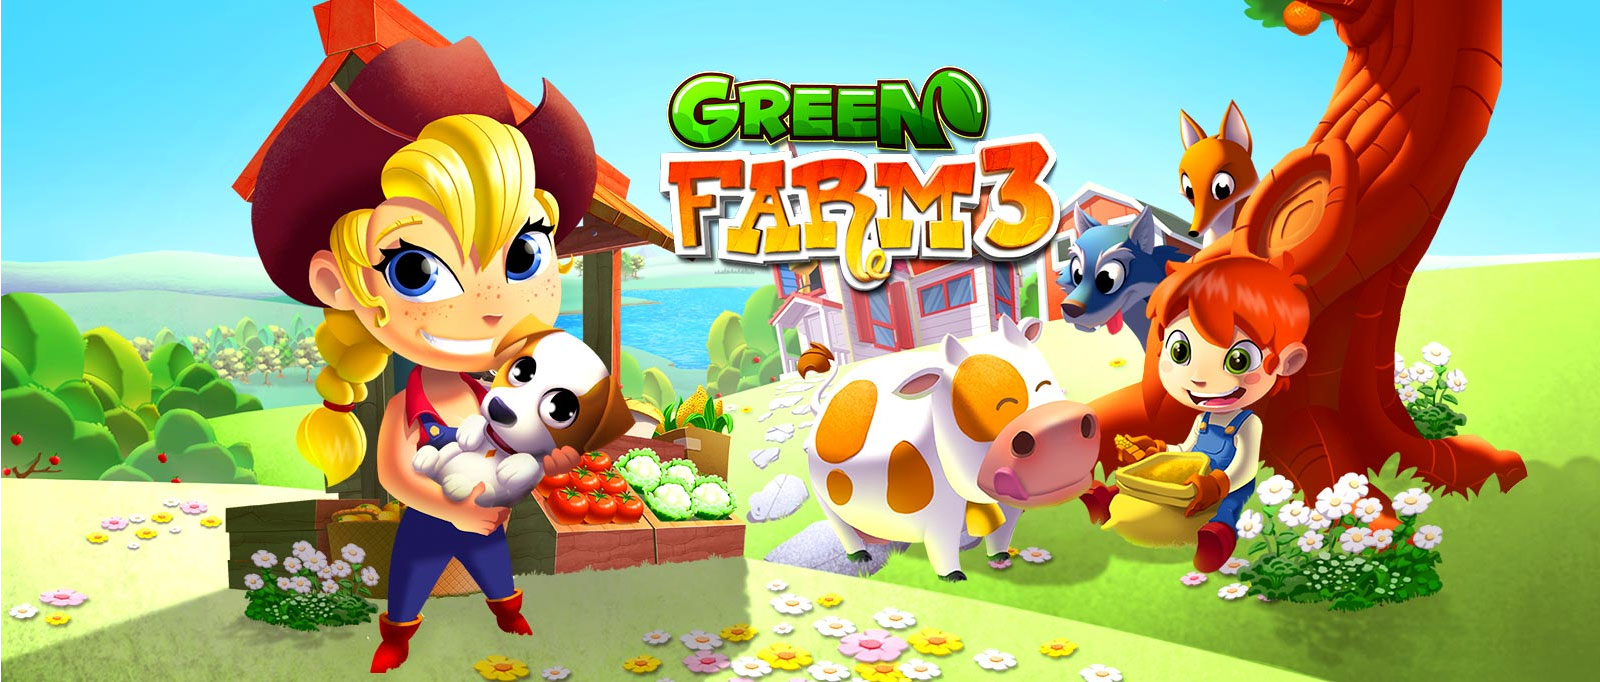 green farm 3 apk game torrent